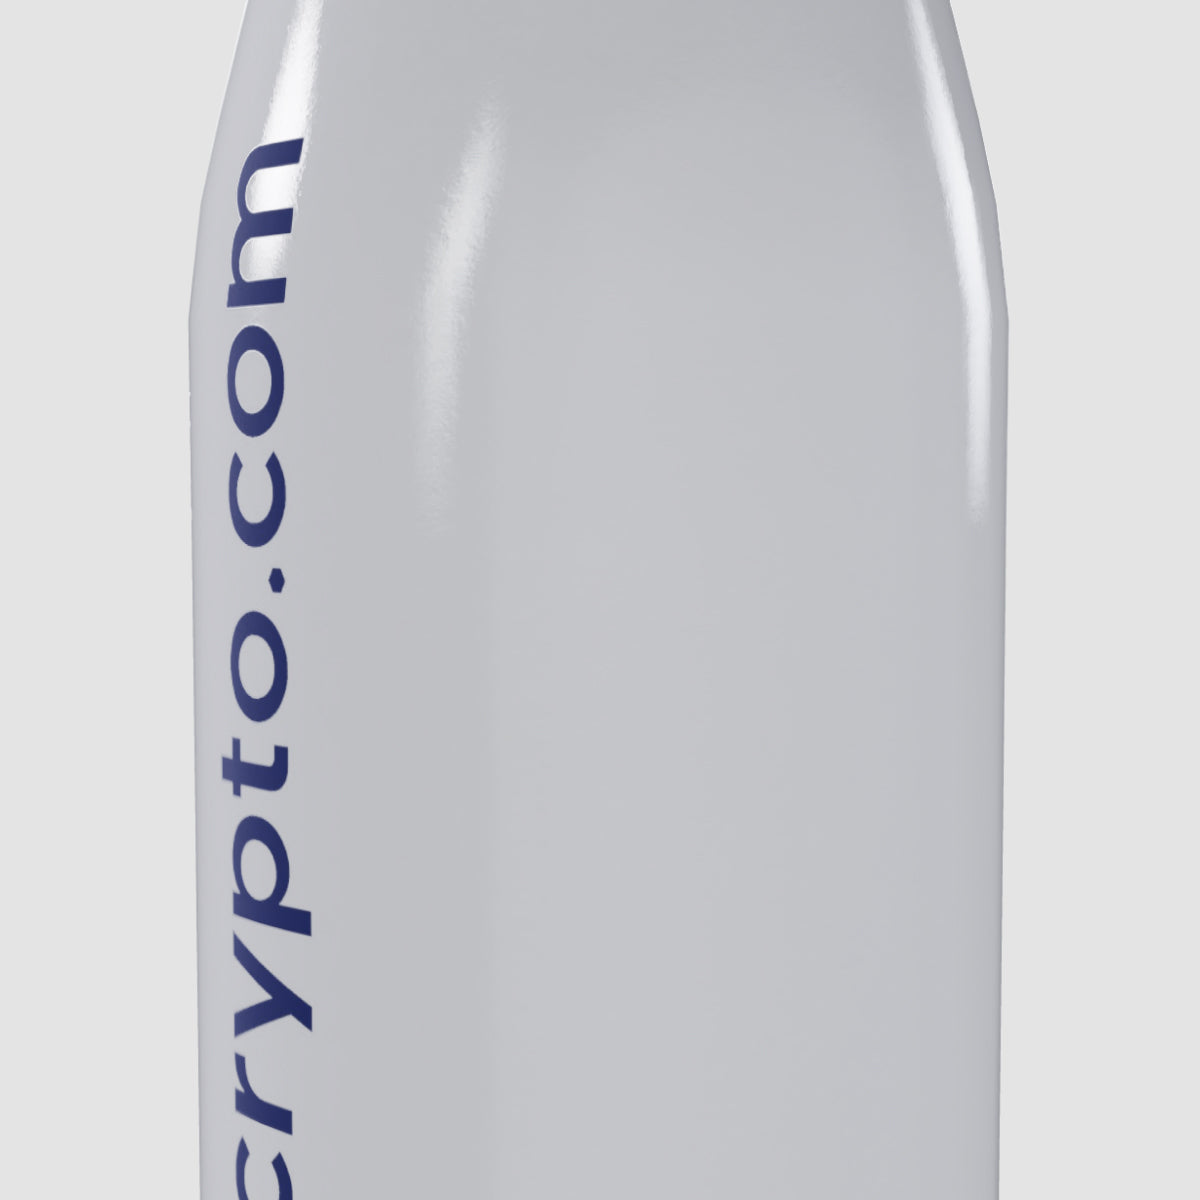 Aluminum Water Bottle